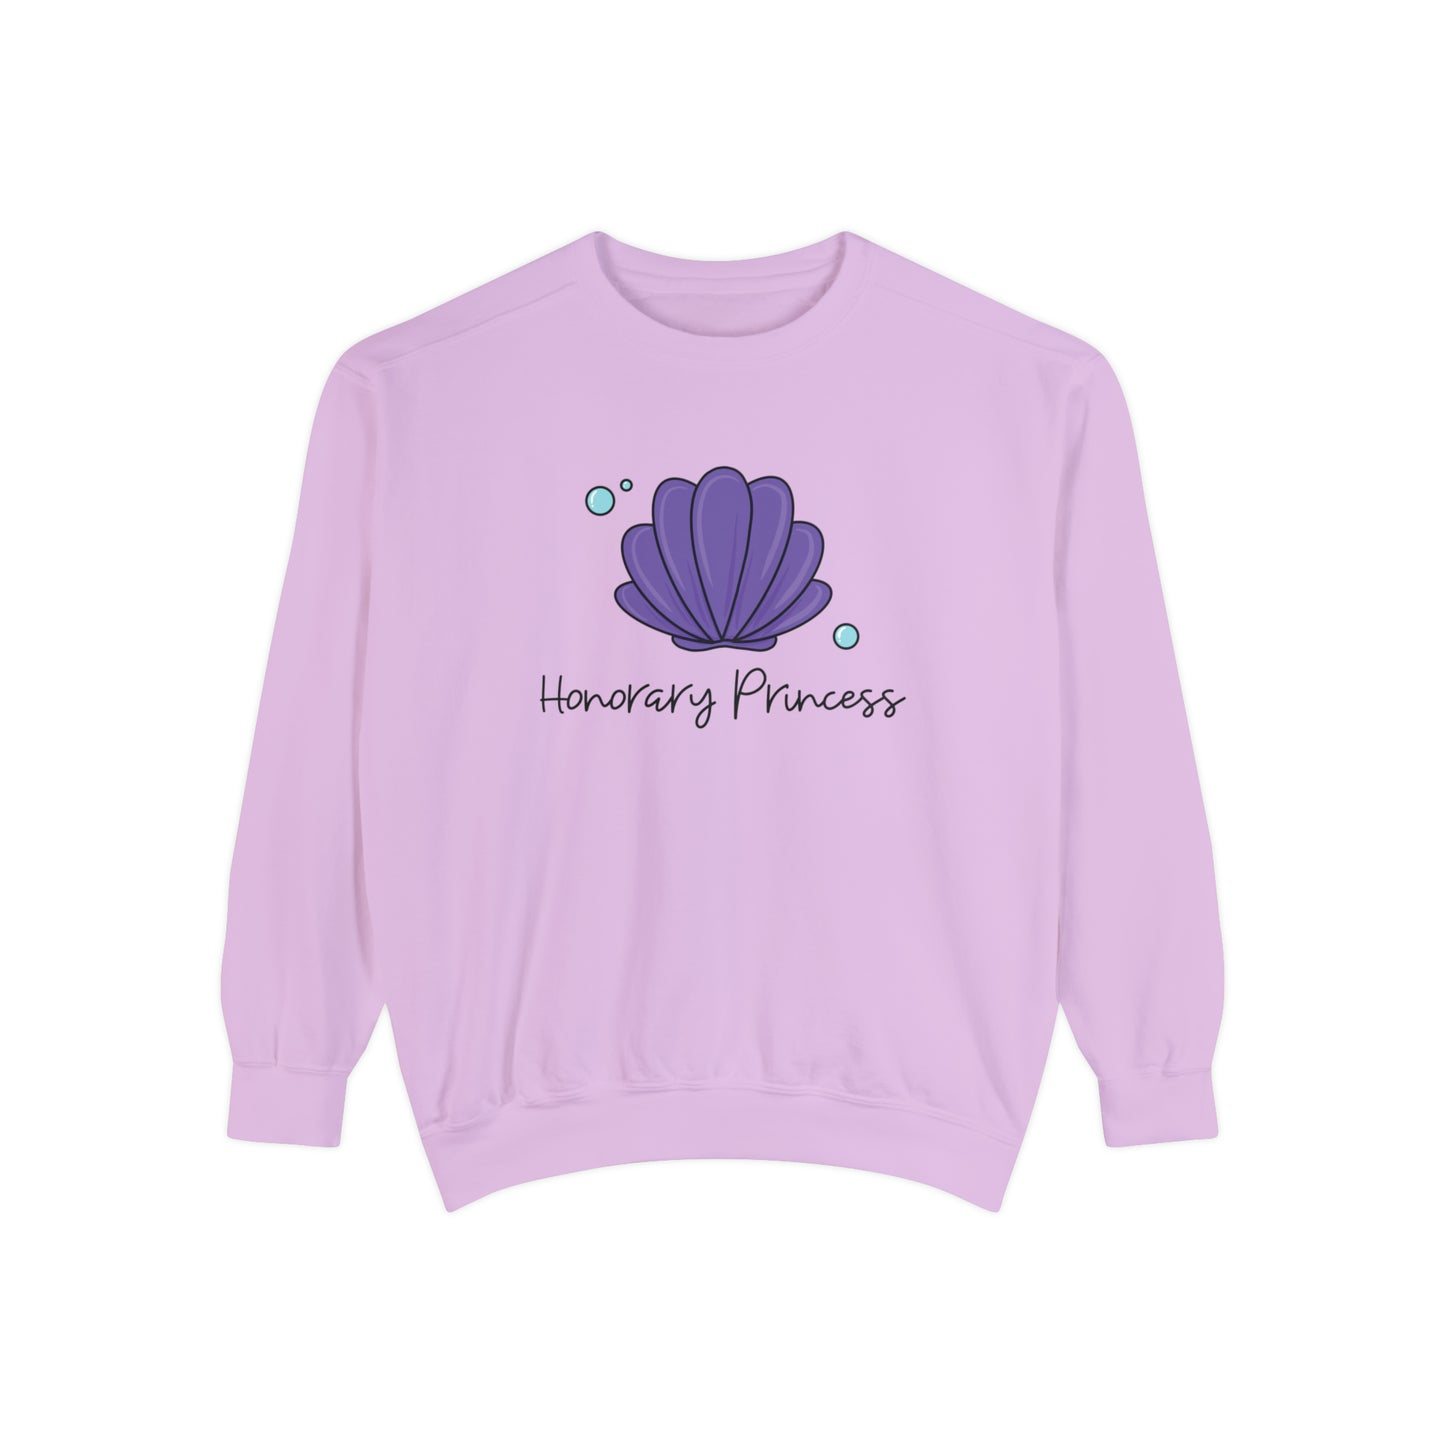 Honorary Princess - Shell Sweatshirt